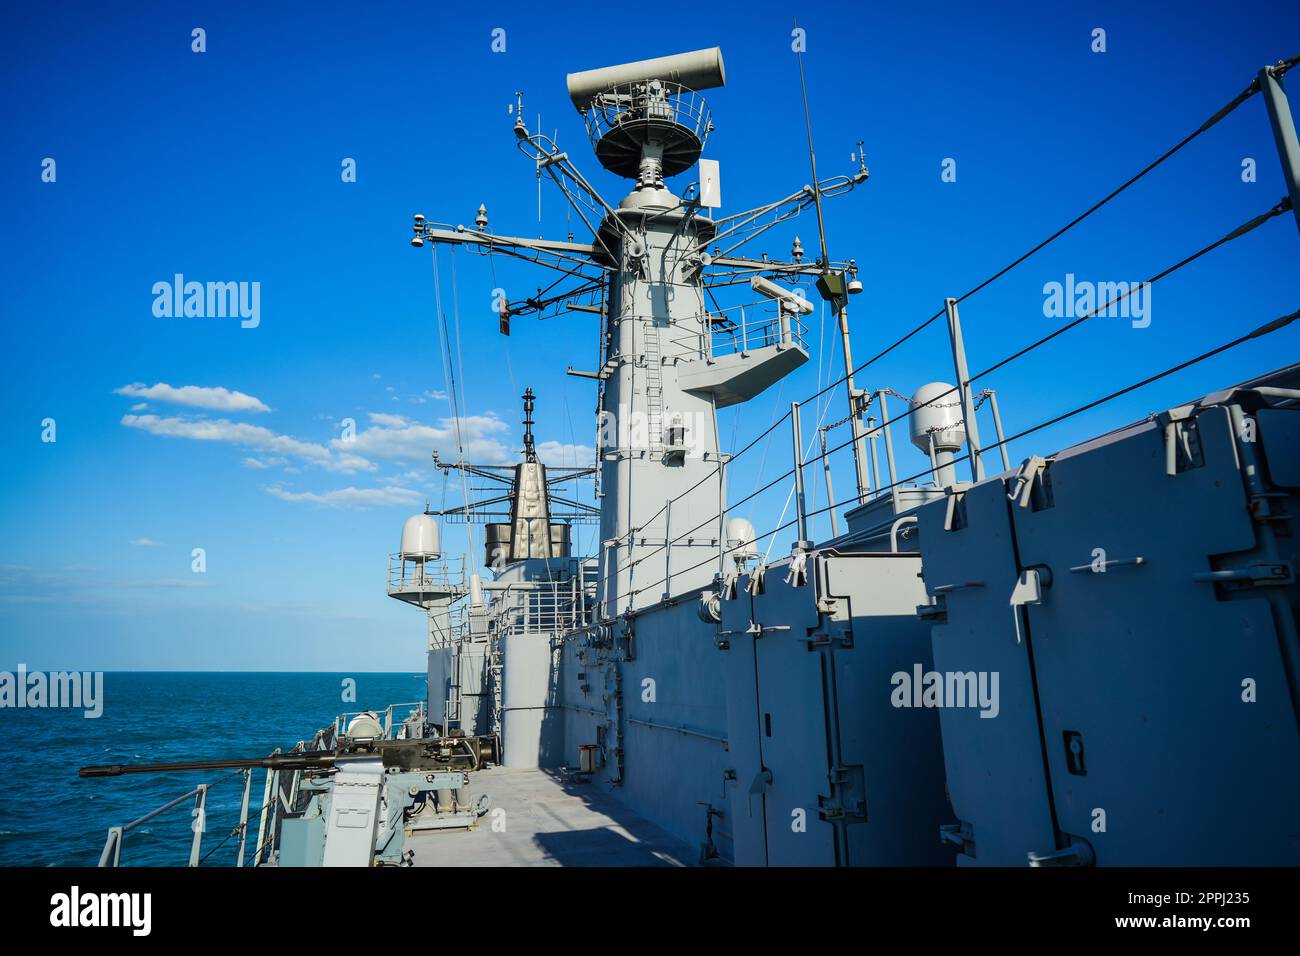 Military radar air surveillance on navy ship Stock Photo